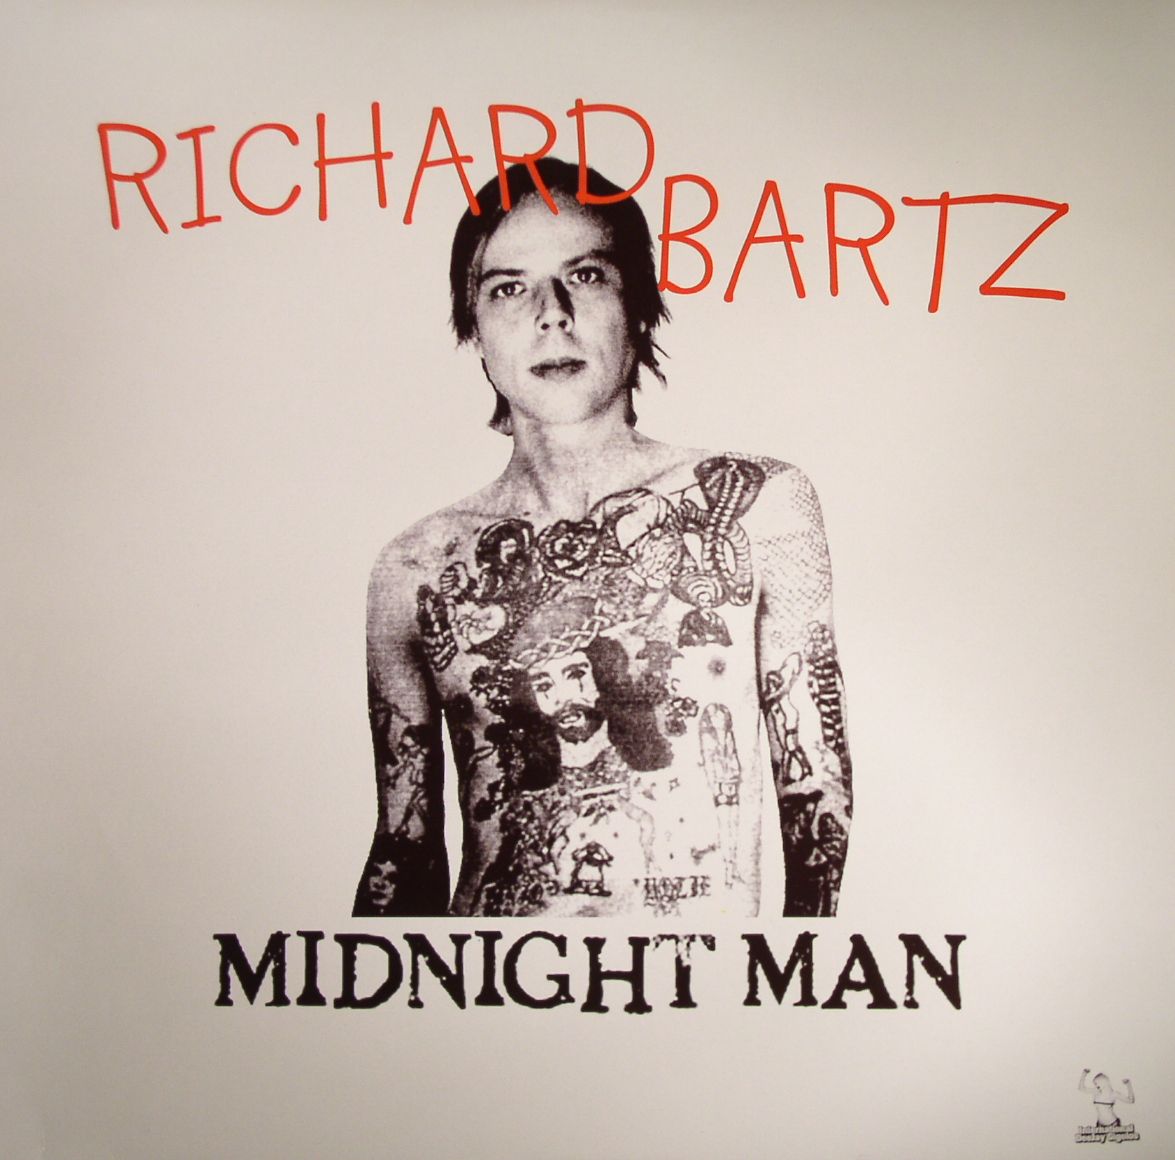 BARTZ, Richard - Midnight Man